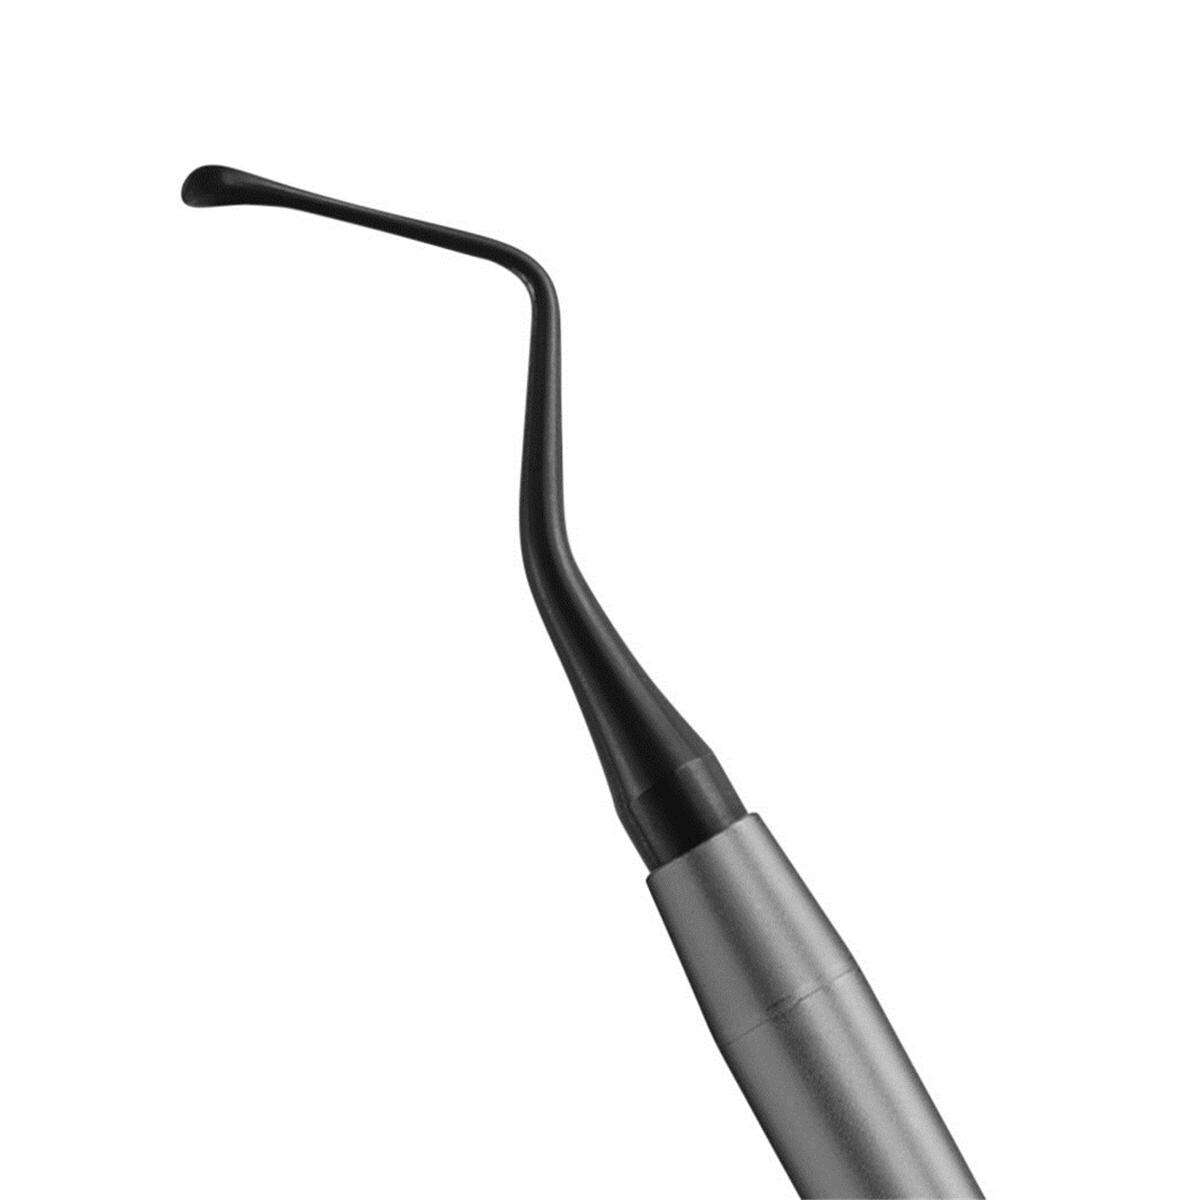 Chirurgische curette Lucas, Black Line - CL86X,  2,8 mm - smooth handle